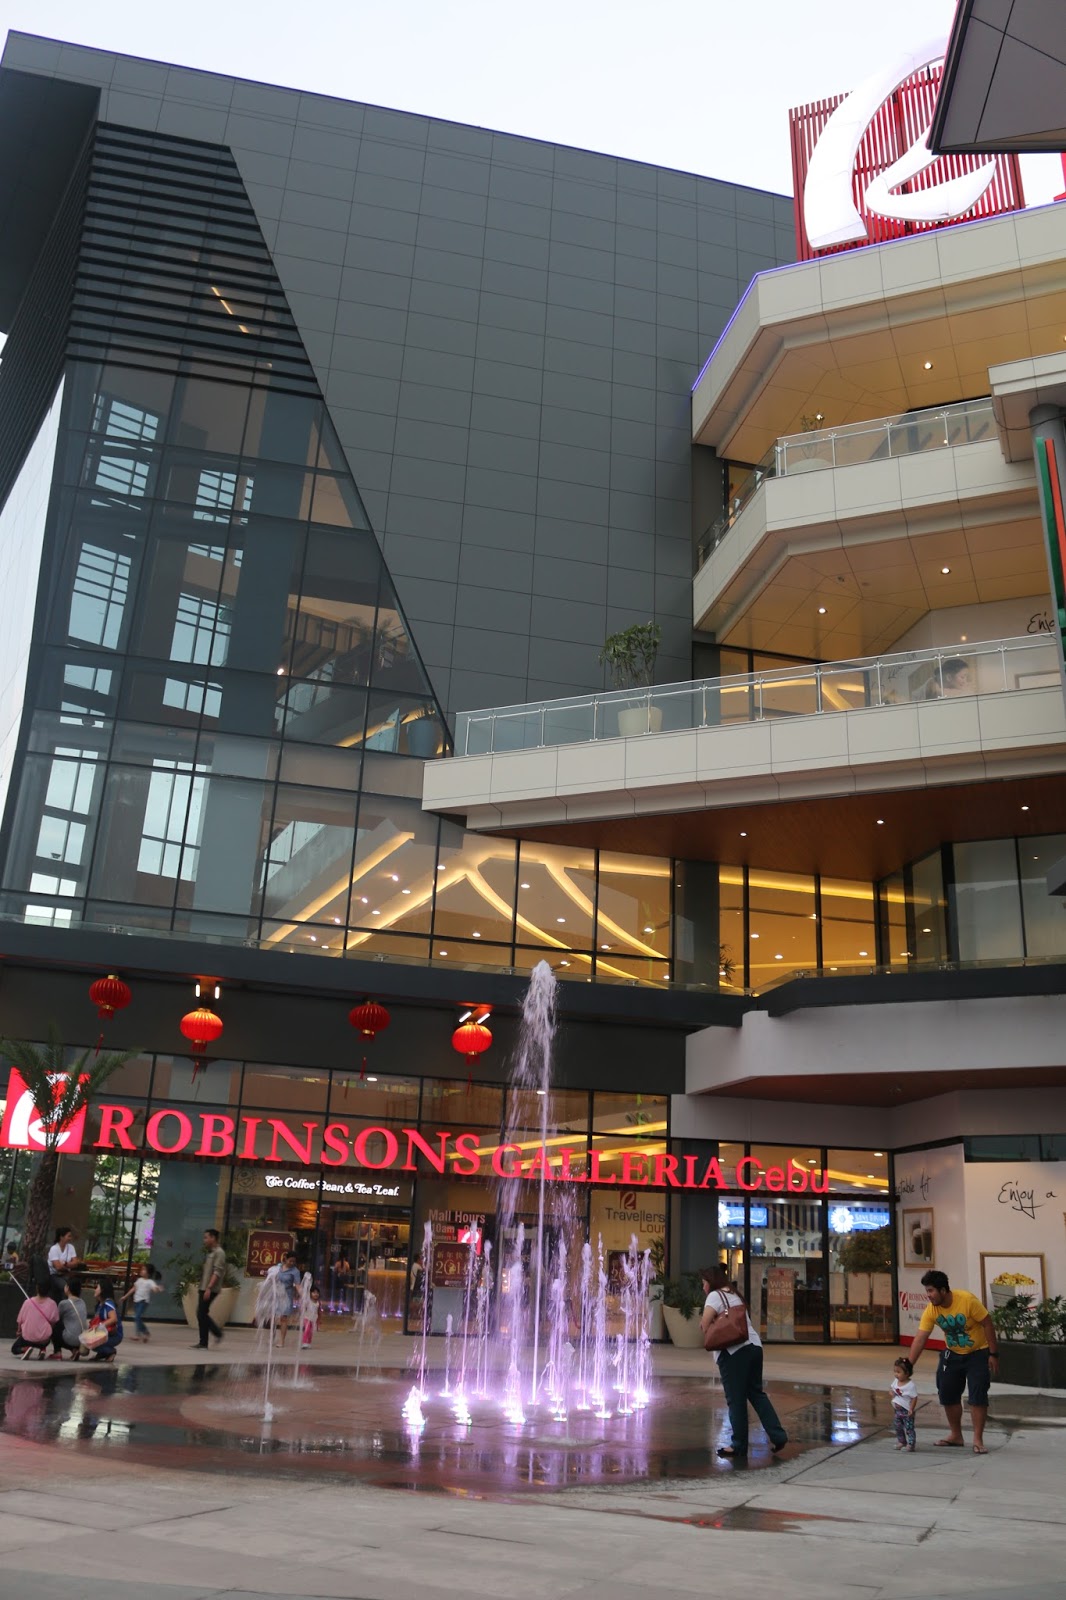 I Love Cebu: Online Travel Guide: Robinson's Galleria Cebu: Cebu's